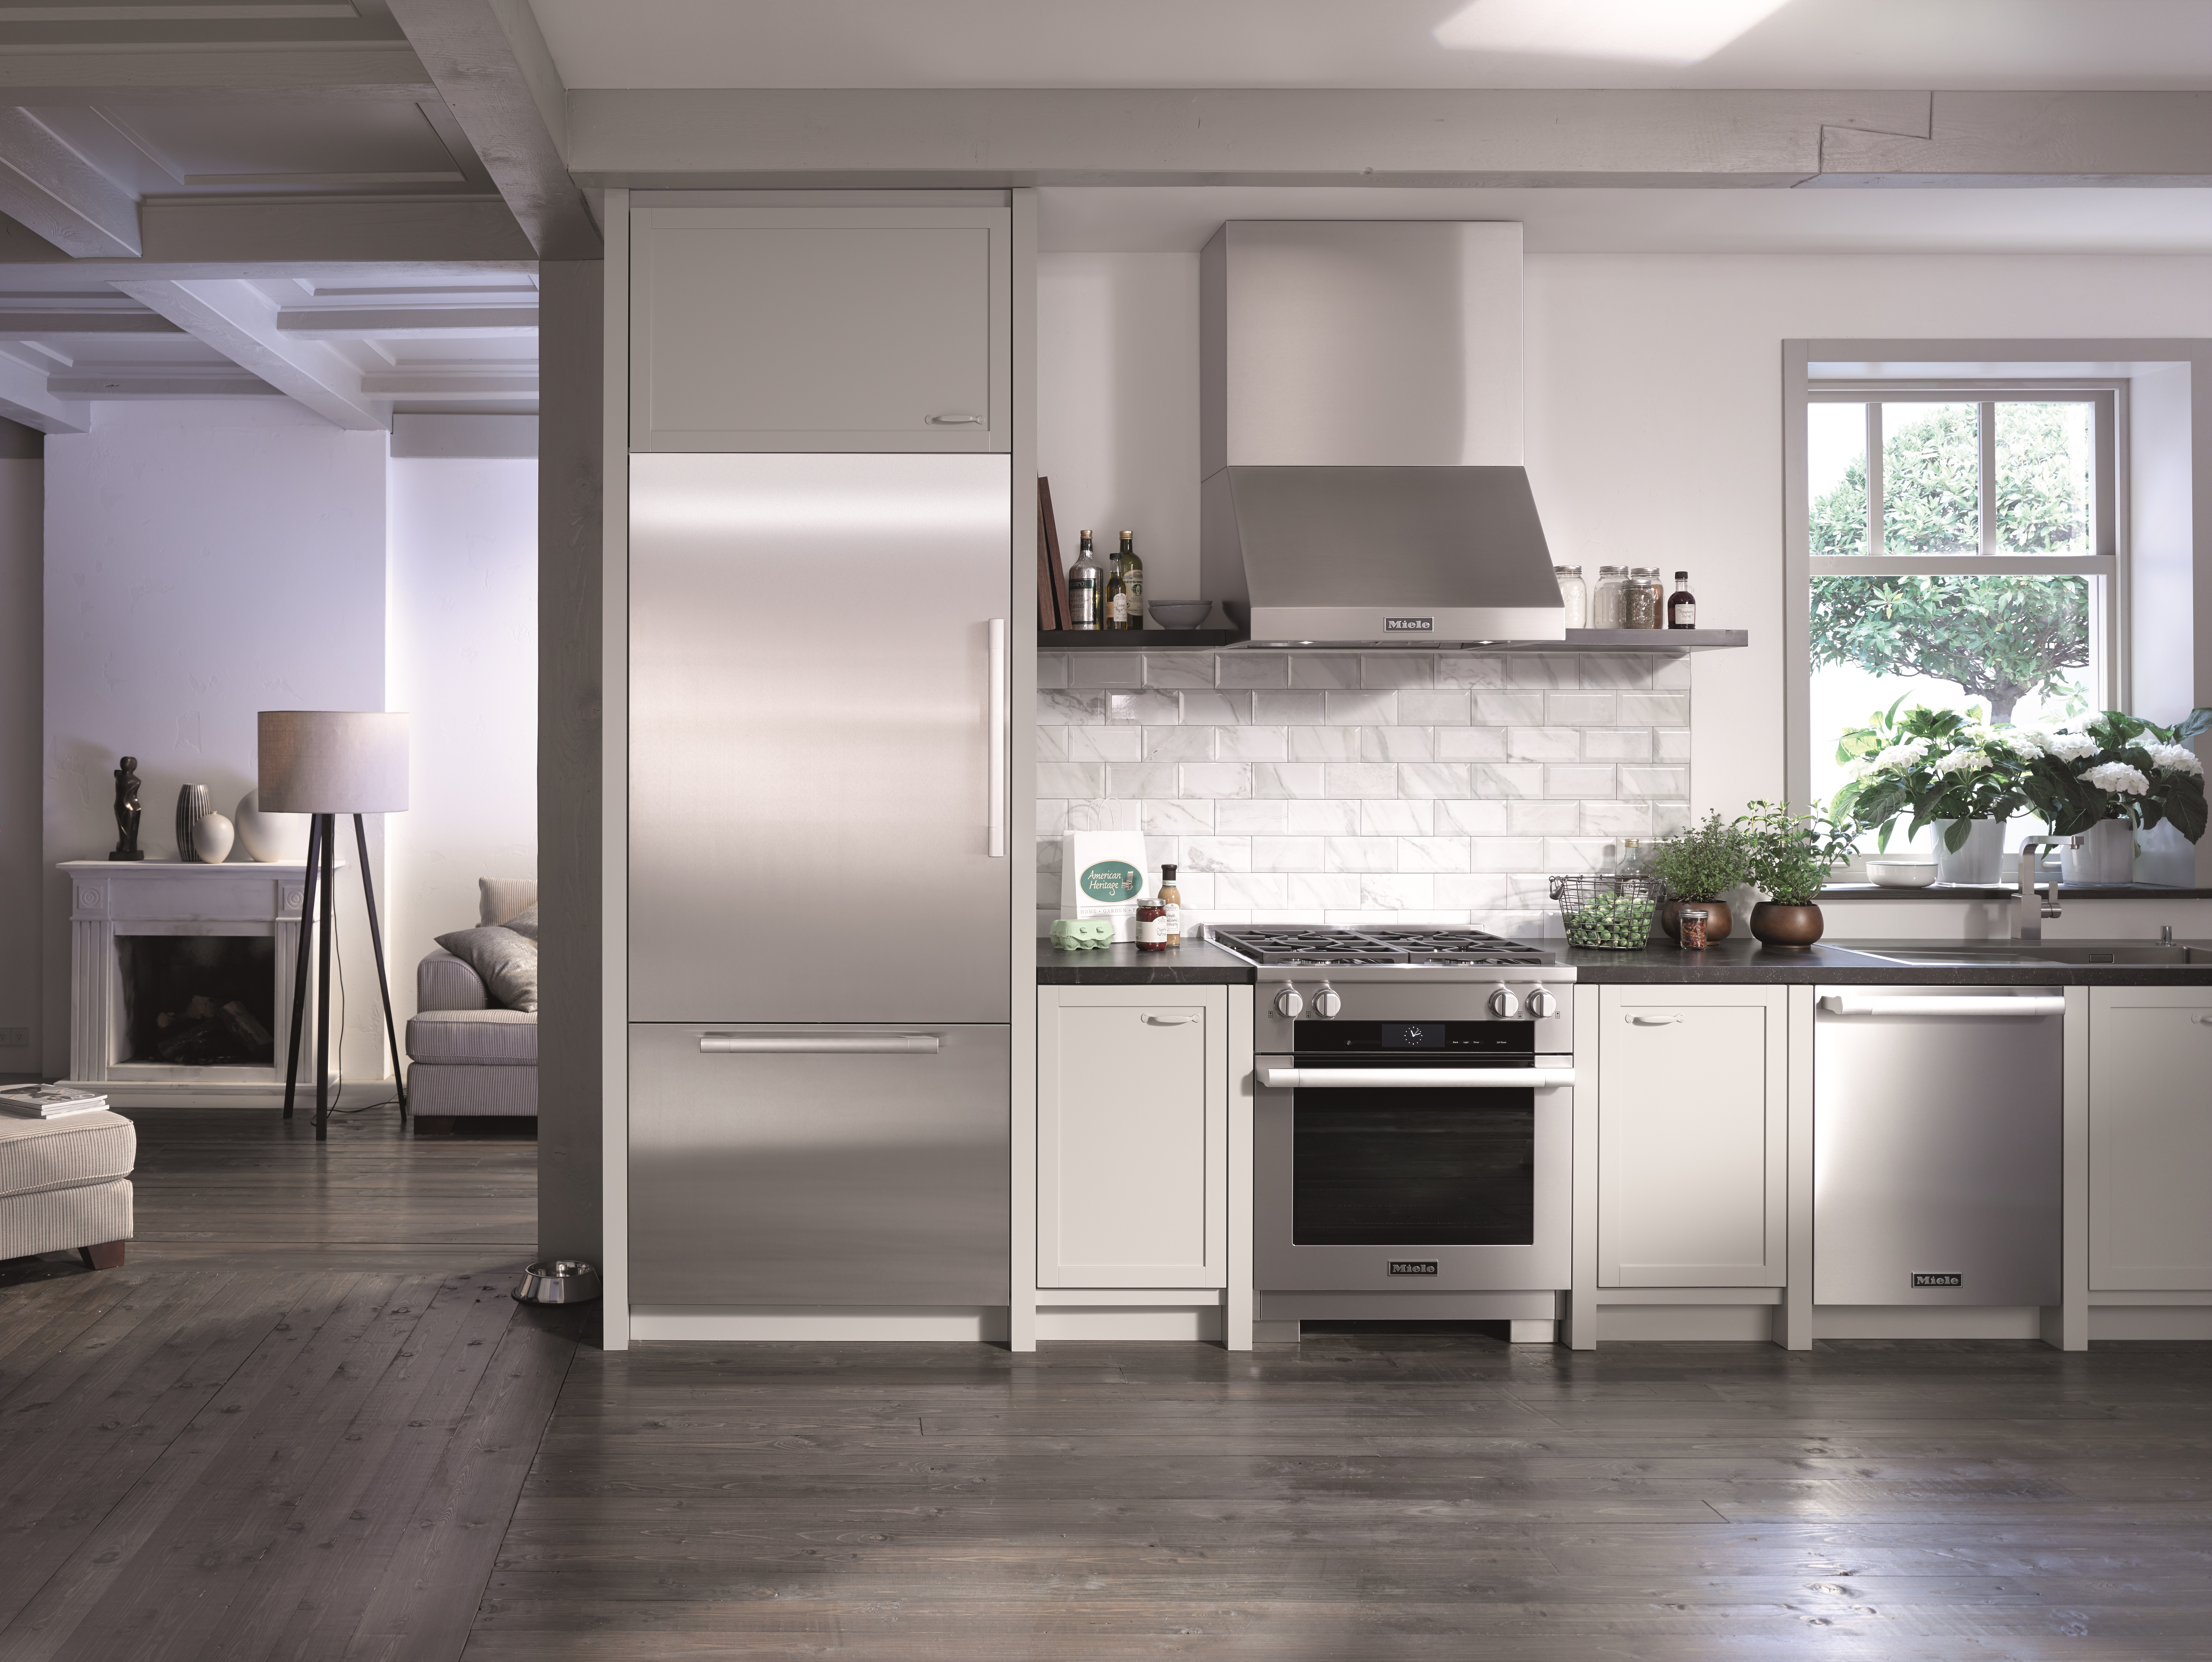 stainless-steel Miele bottom-freezer refrigerator in clean kitchen